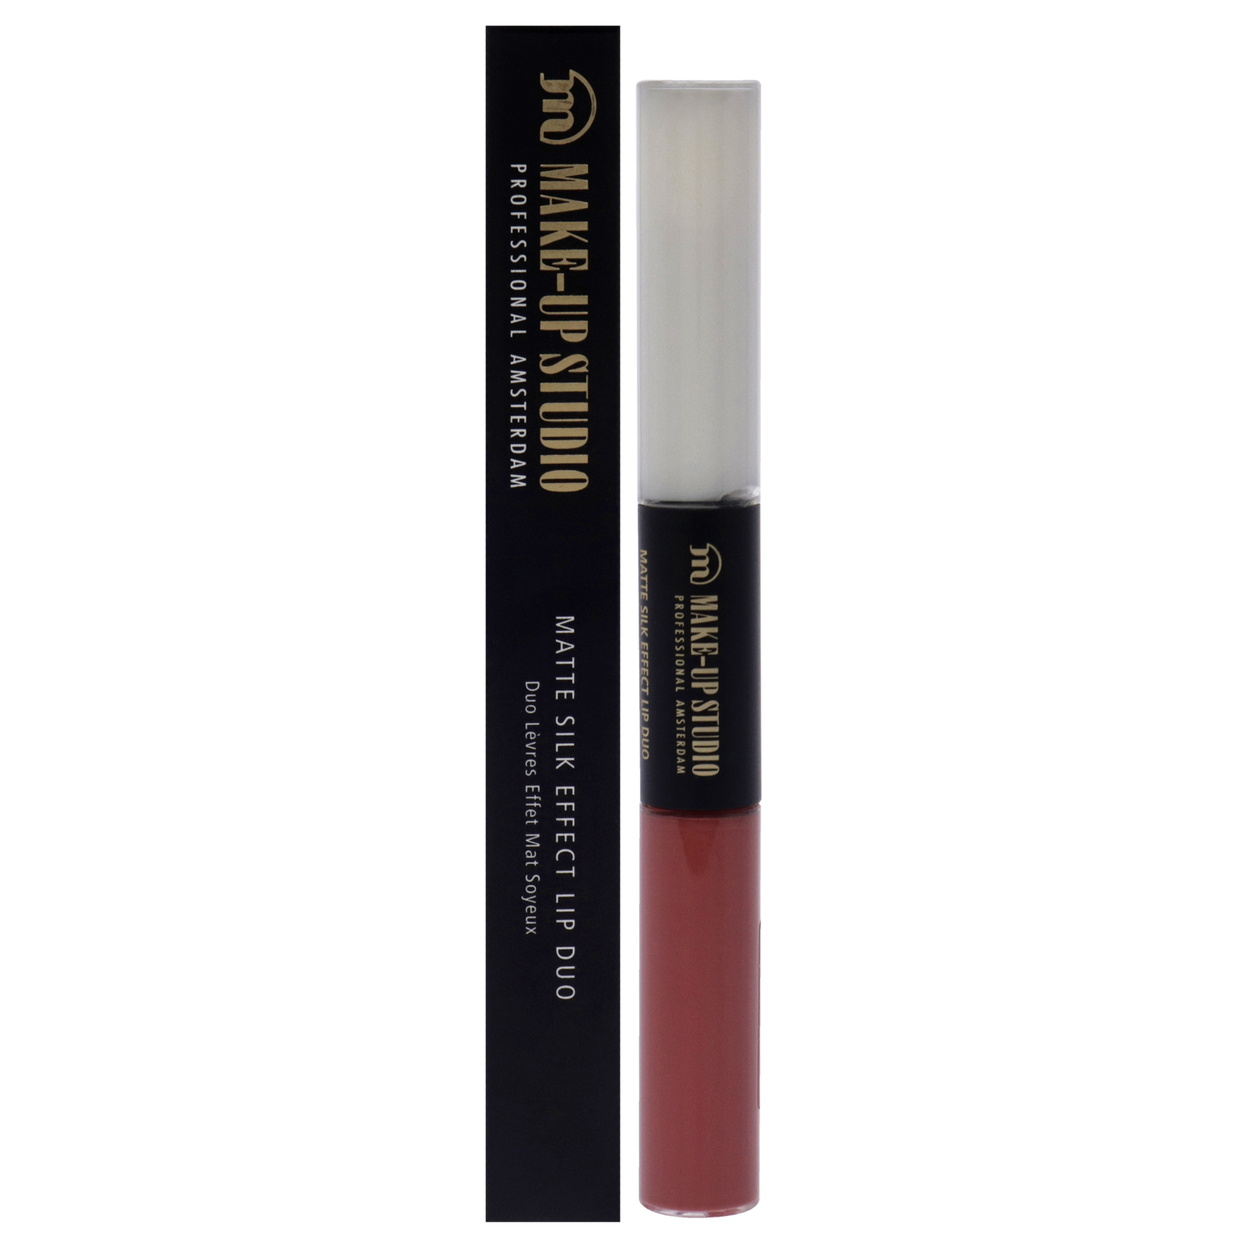 Make-Up Studio Matte Silk Effect Lip Duo - Charming Coral Lipstick 0.2 Oz